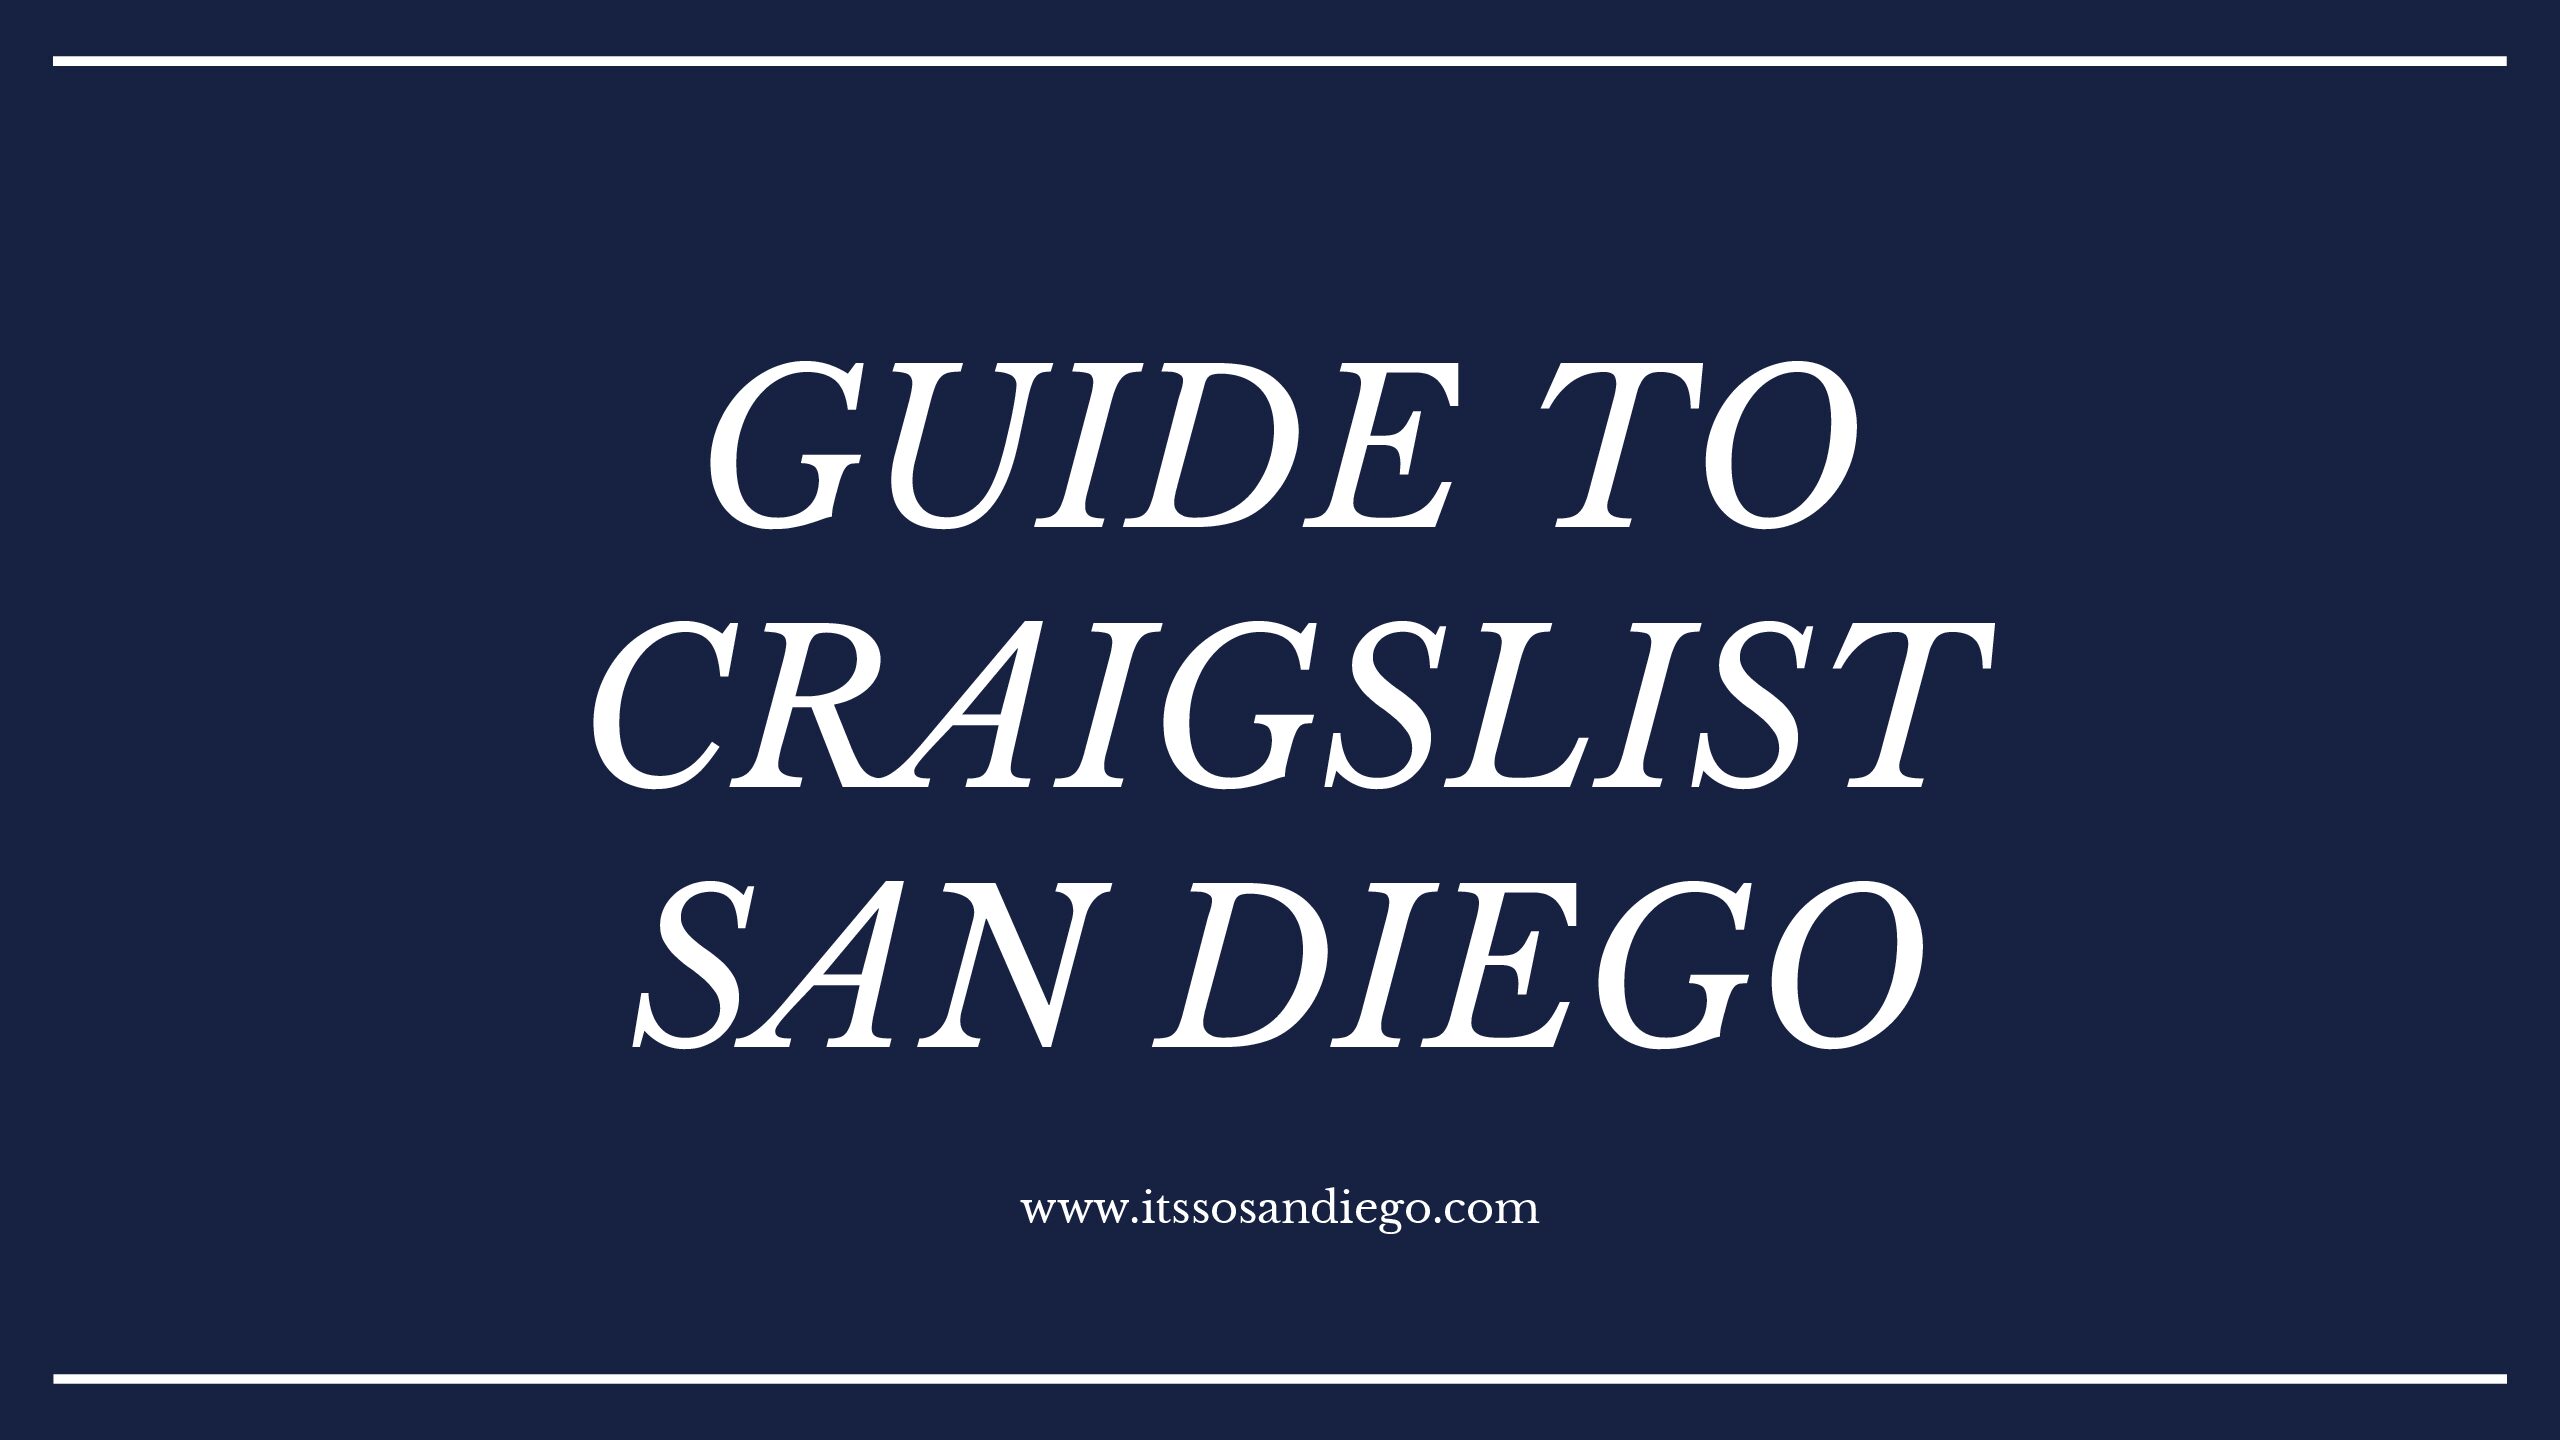 darryl adkins recommends craigslist san diego california pic